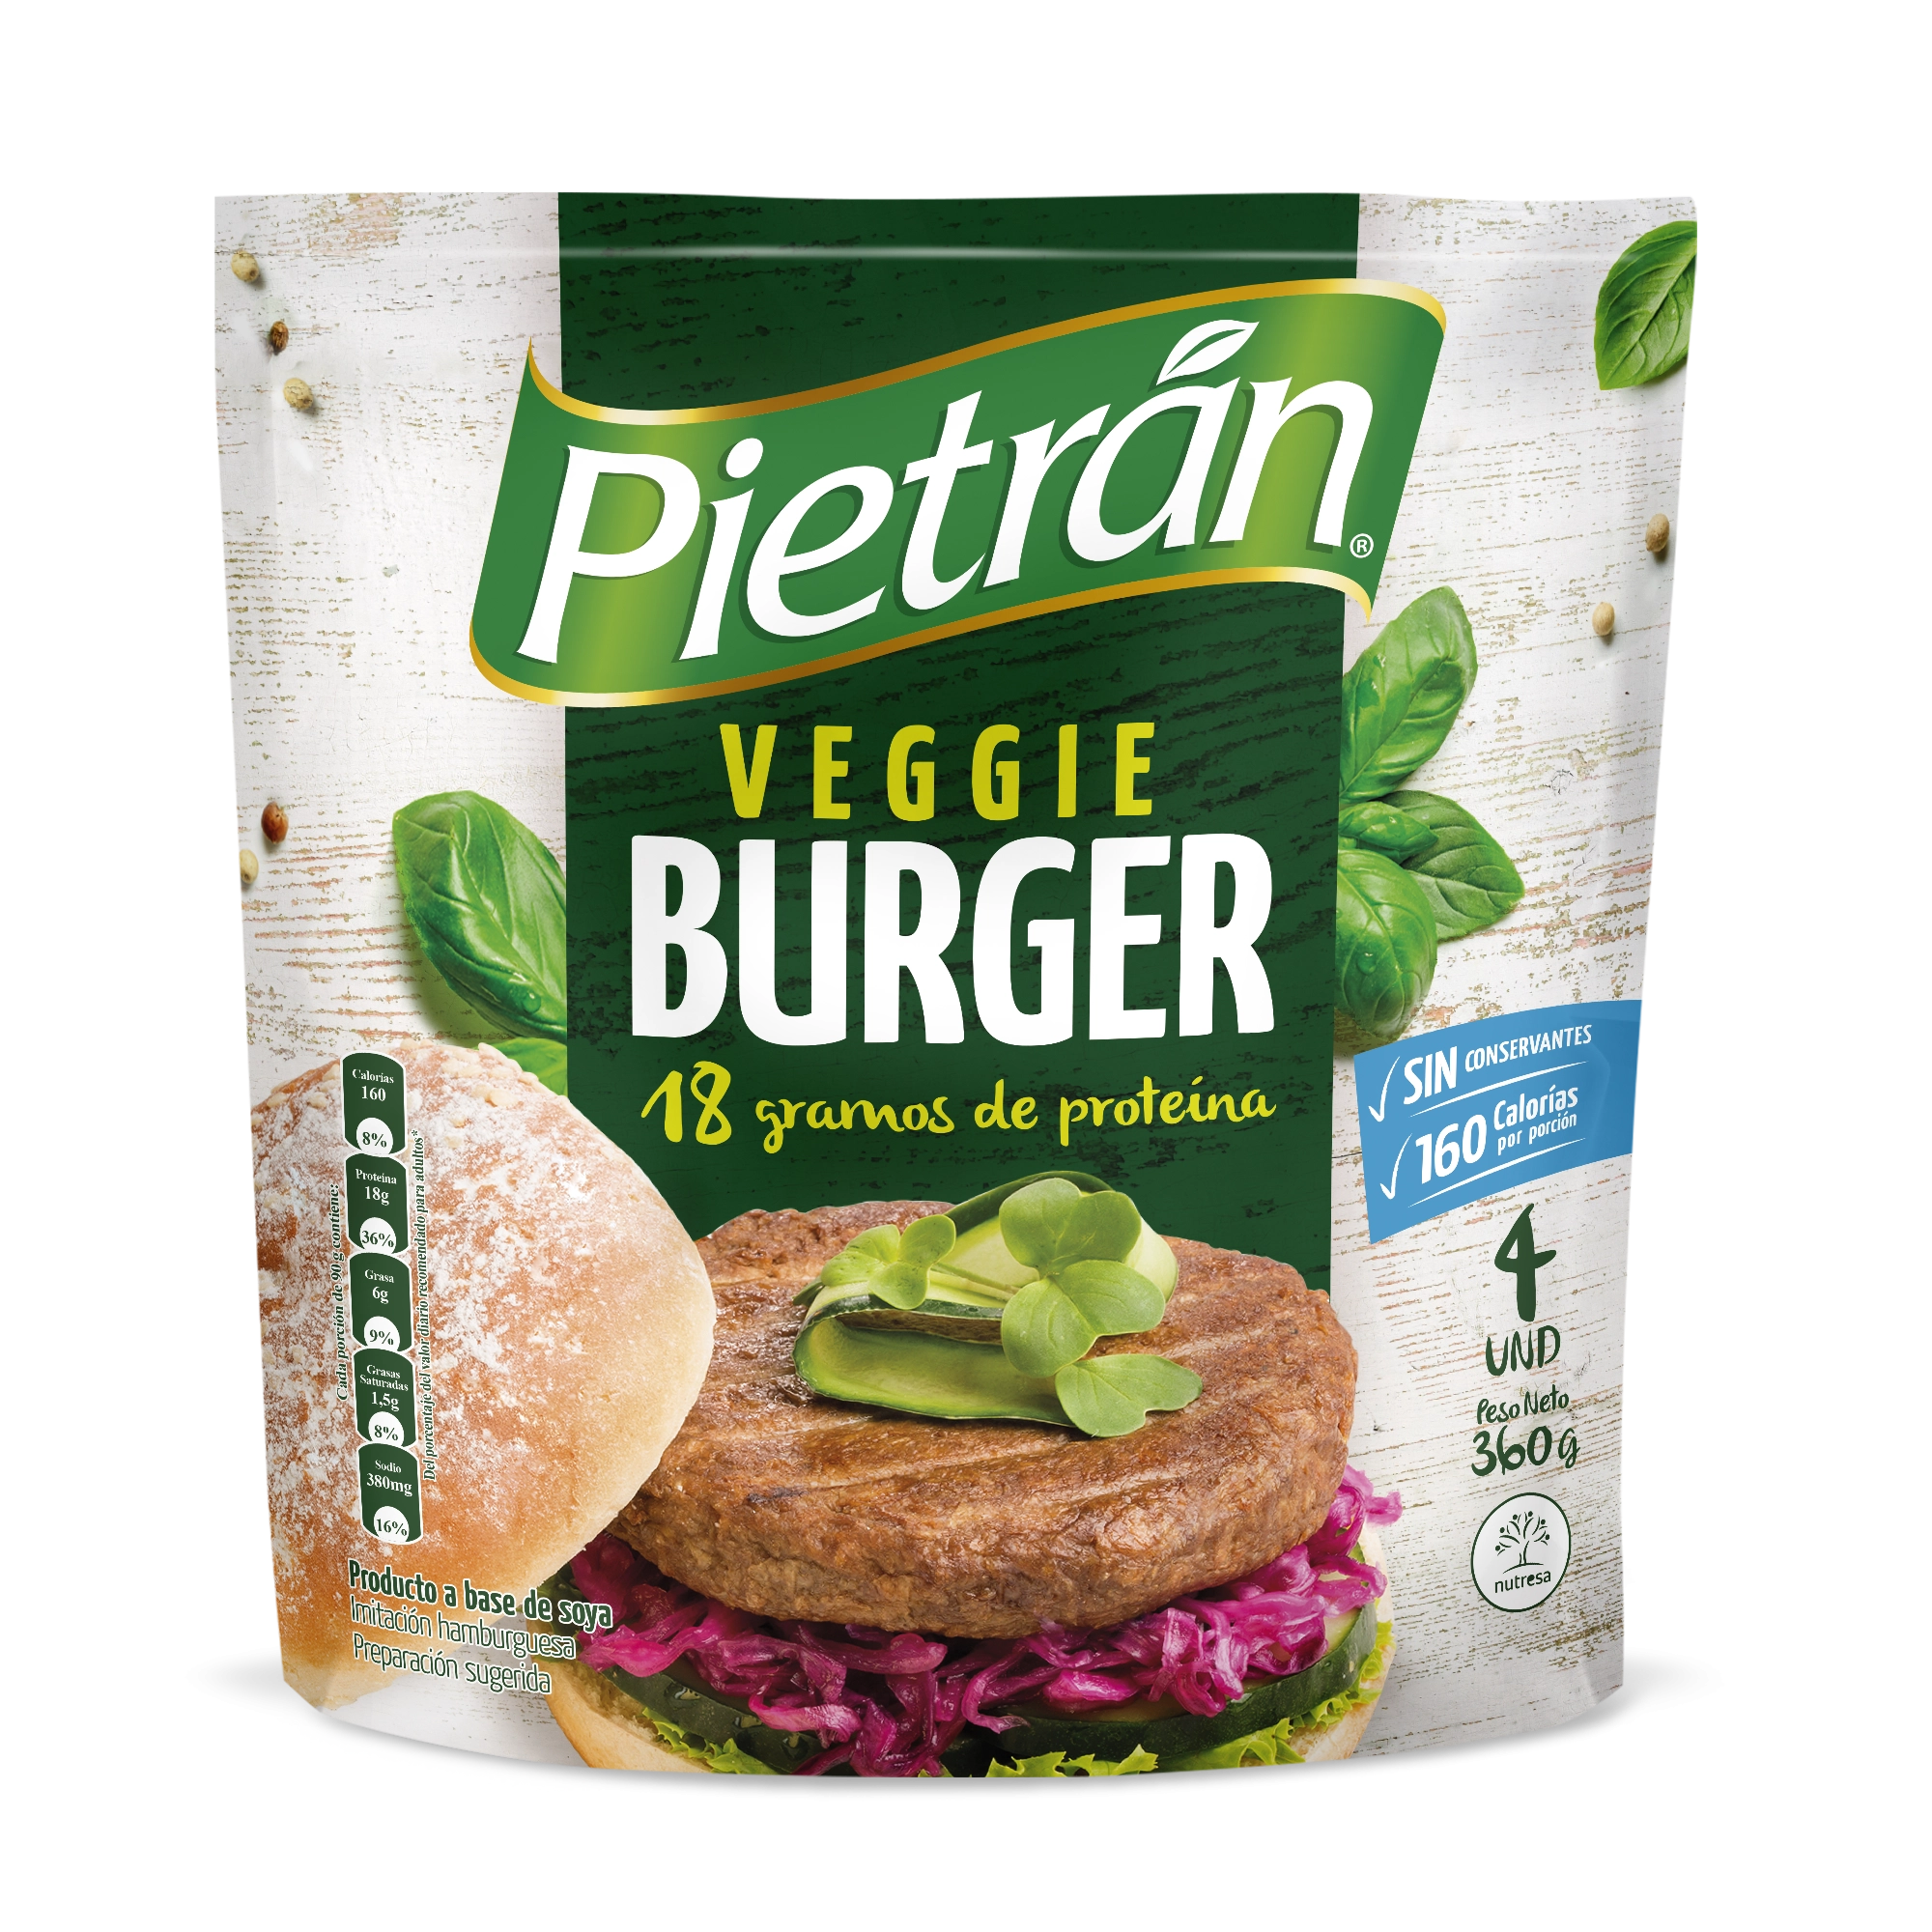 Veggie Burger Pietrán